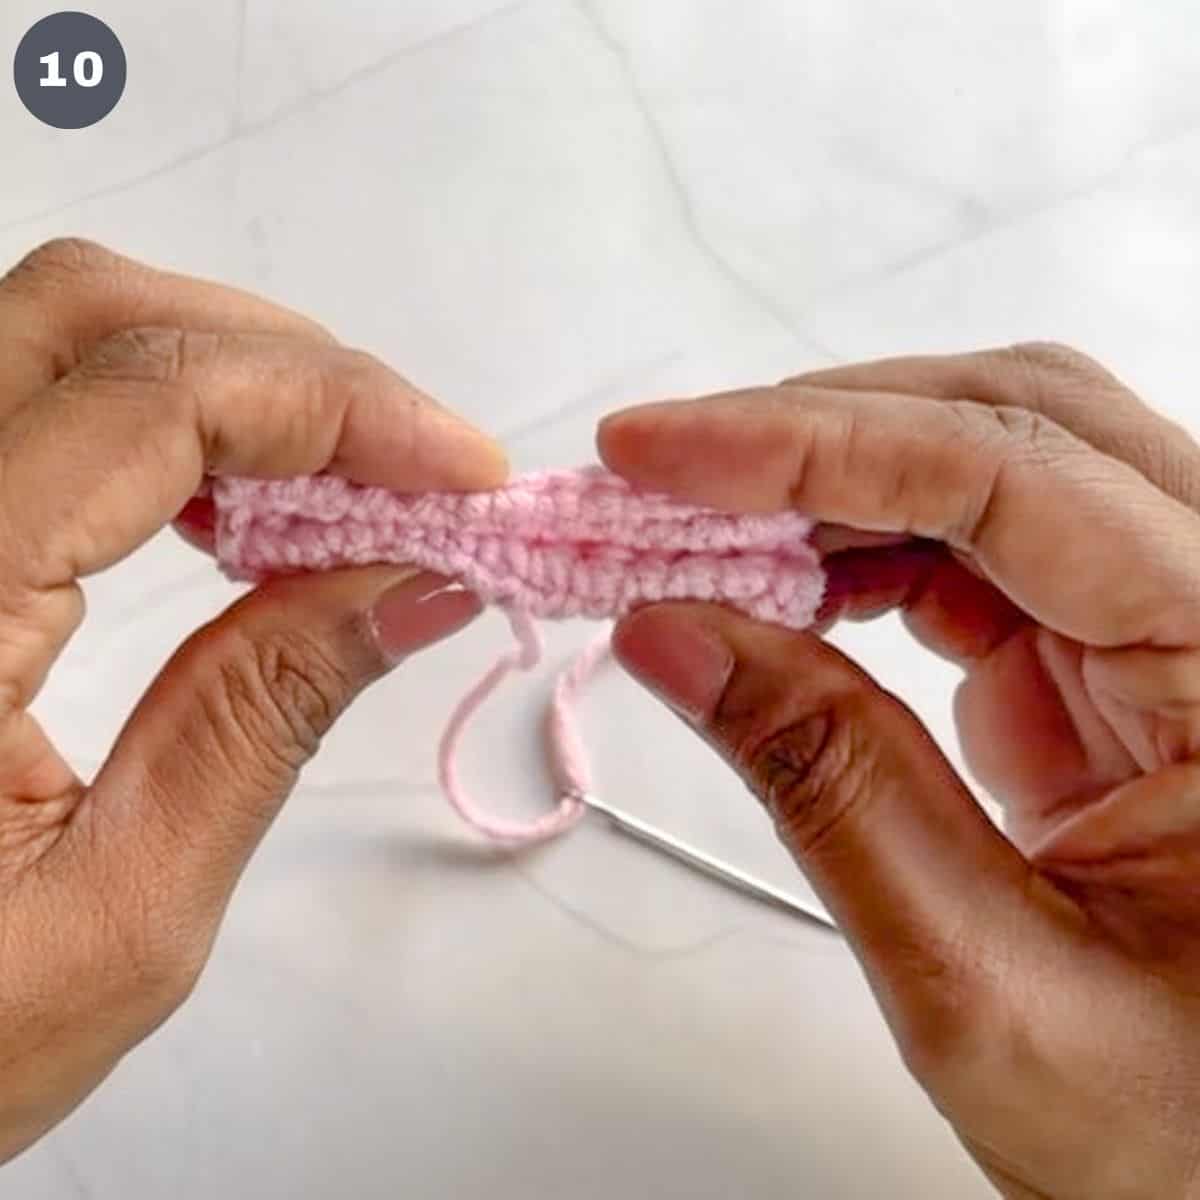 Folding a rectangle crochet piece into a 'w' shape.